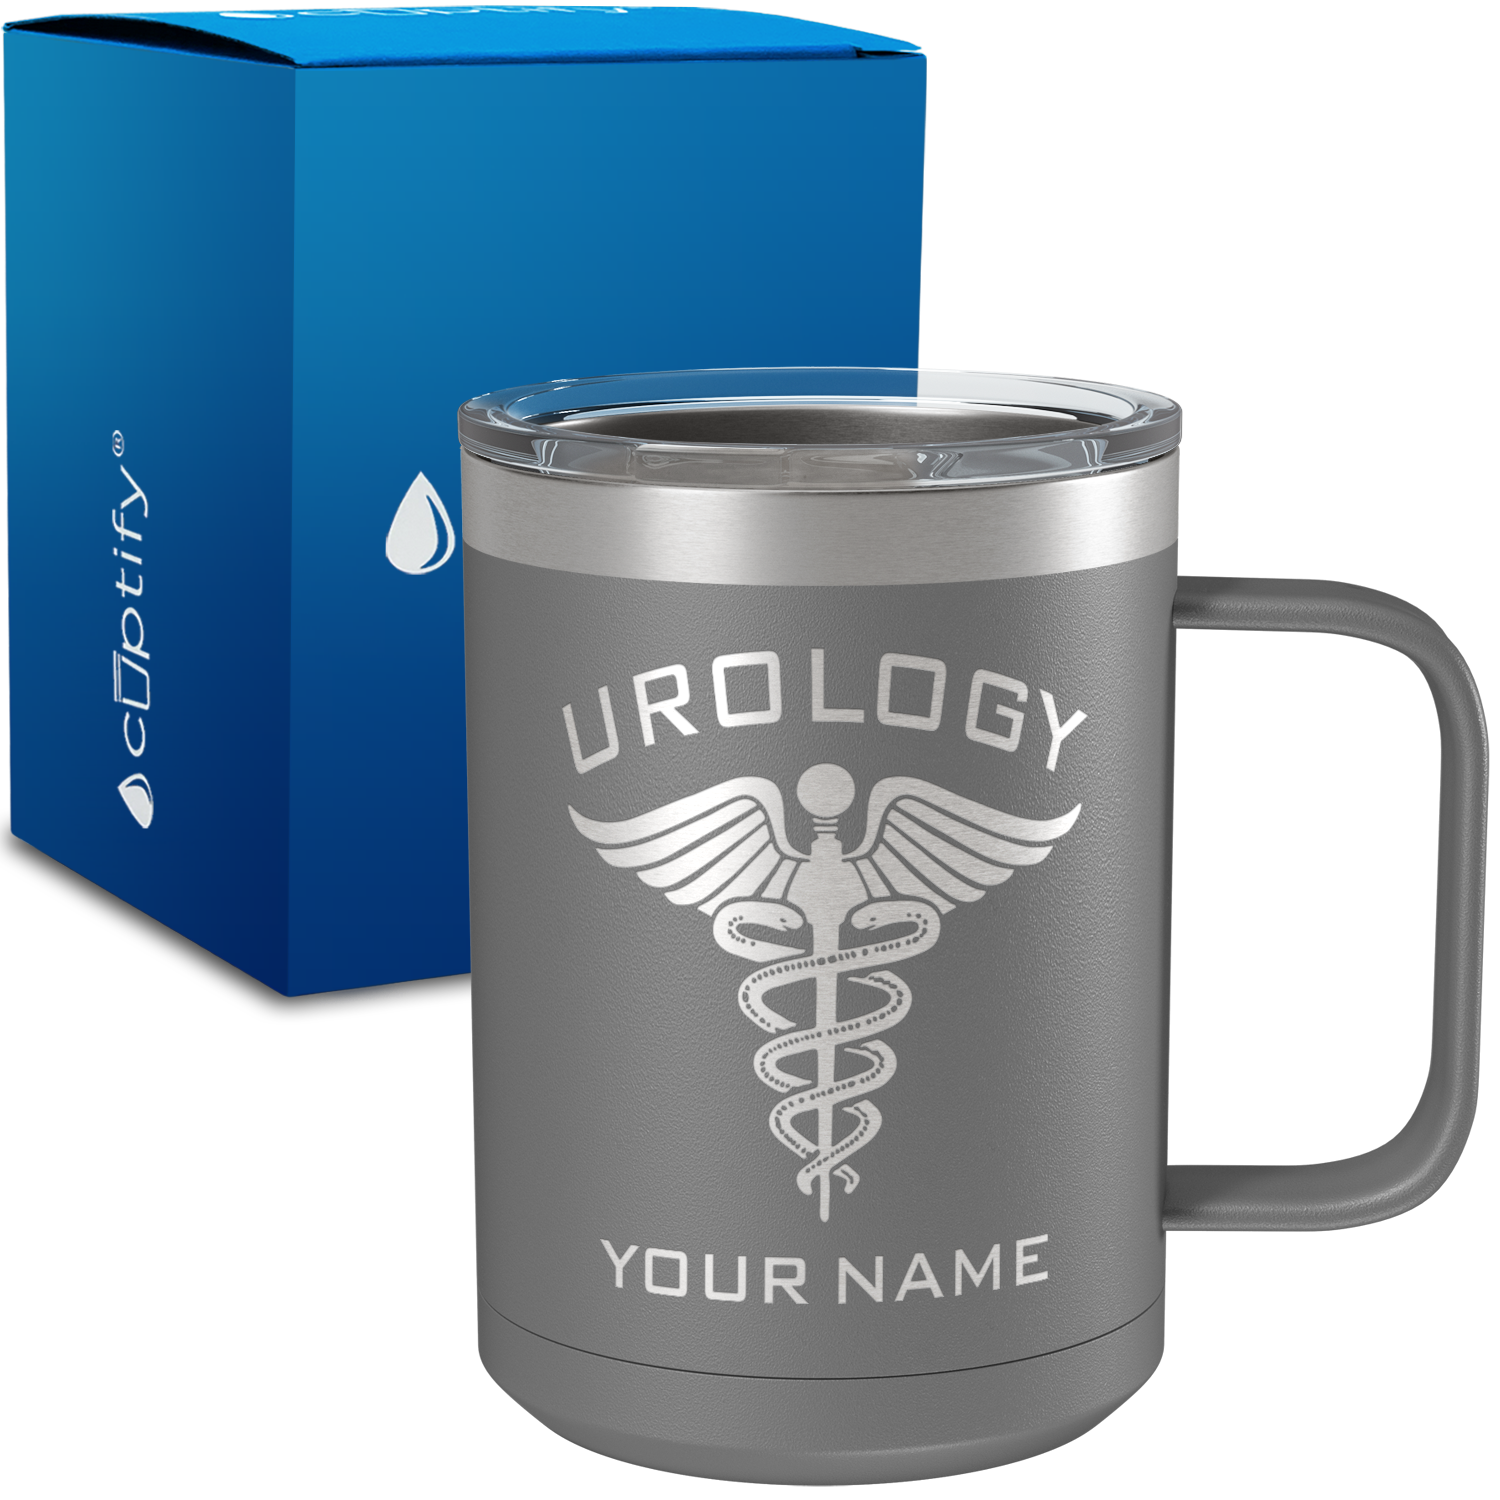 Urology Personalized 15oz Stainless Steel Mug